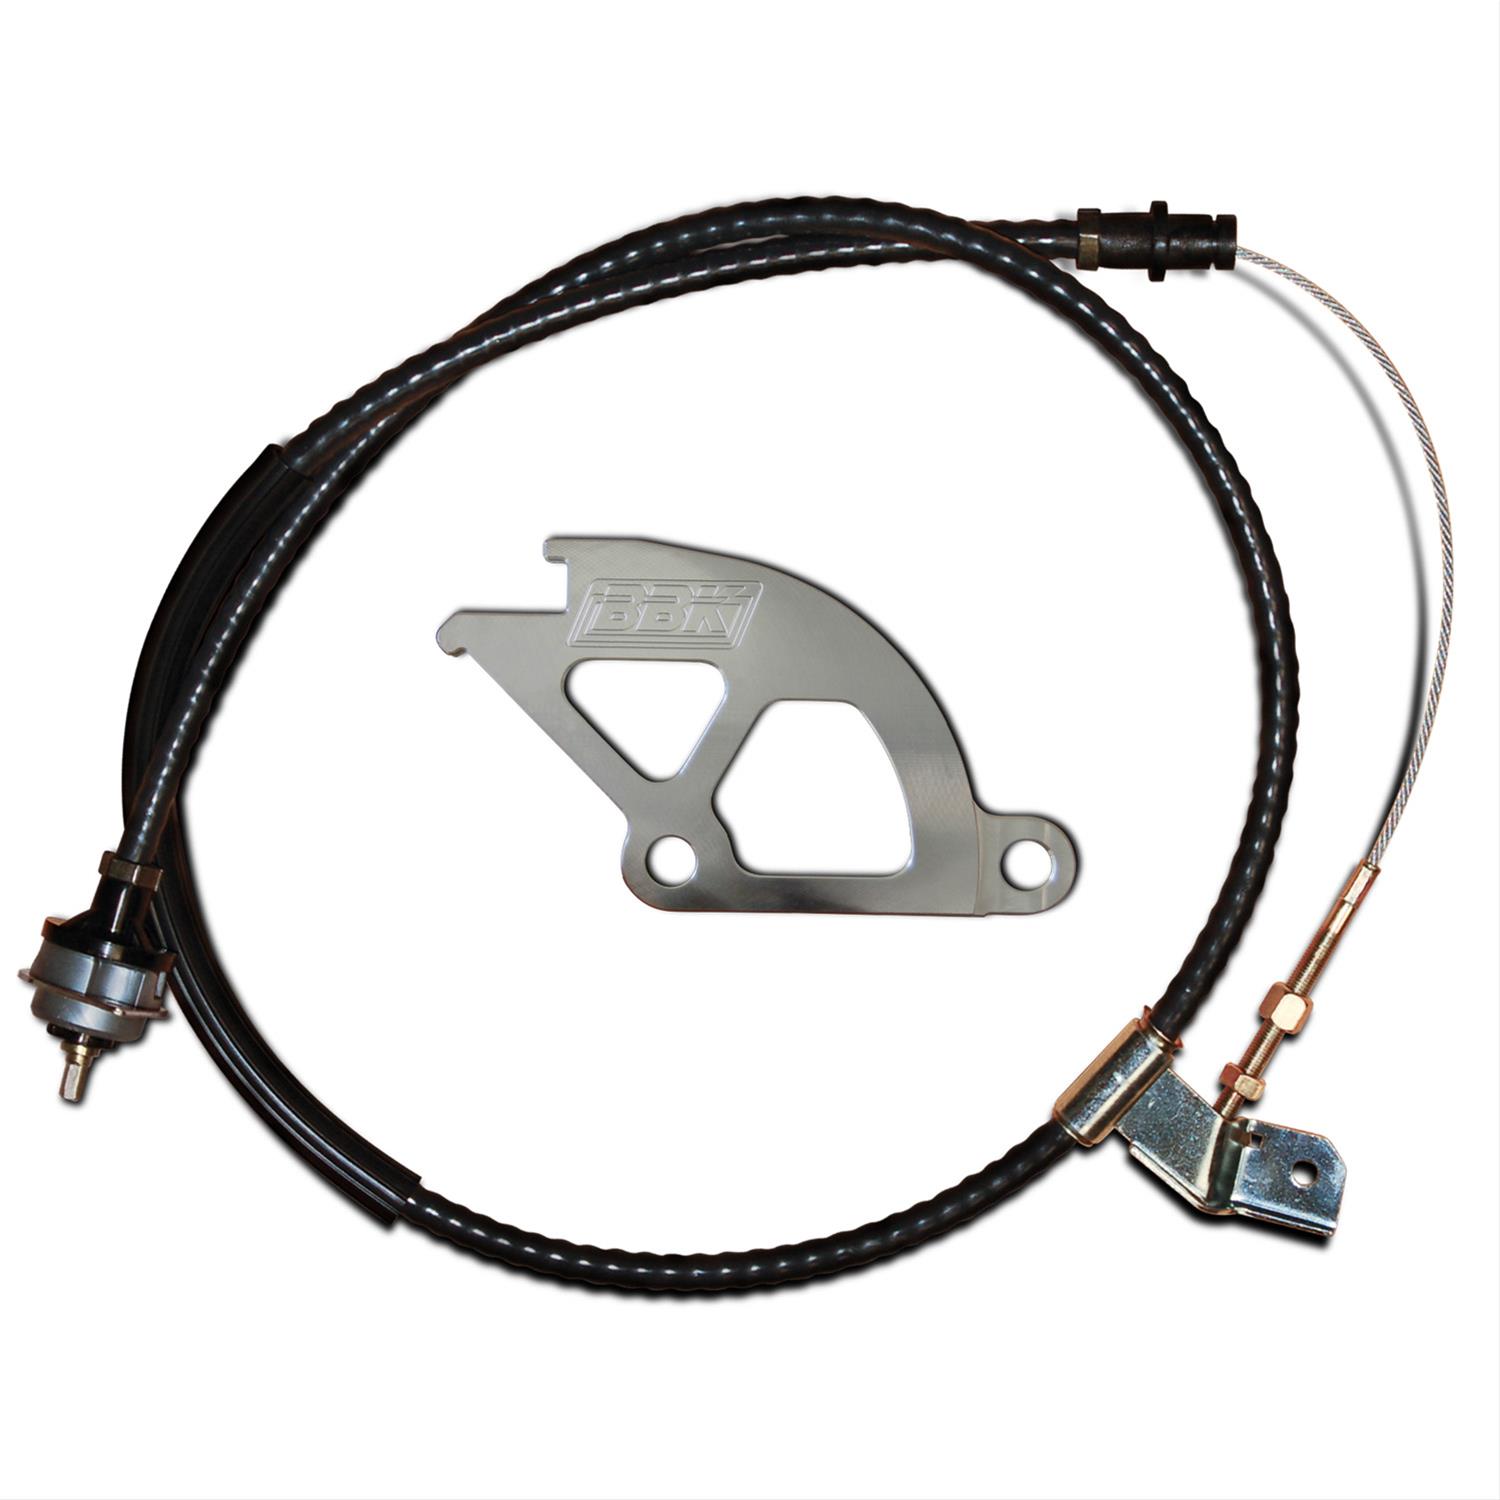 BBK Performance 1609 BBK Adjustable Clutch Cable and Quadrant Kits .